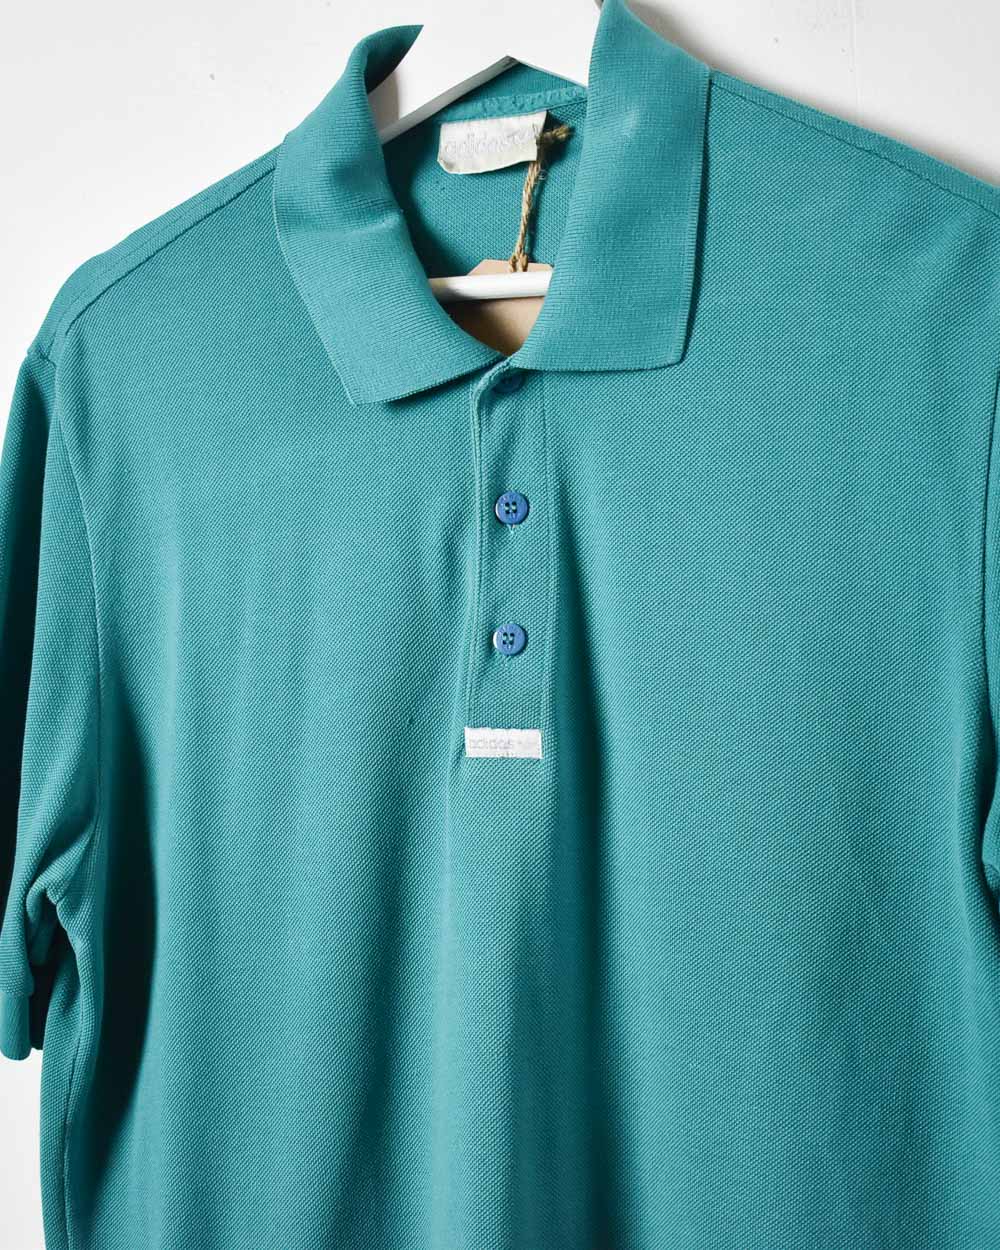 Green Adidas Polo Shirt - Large